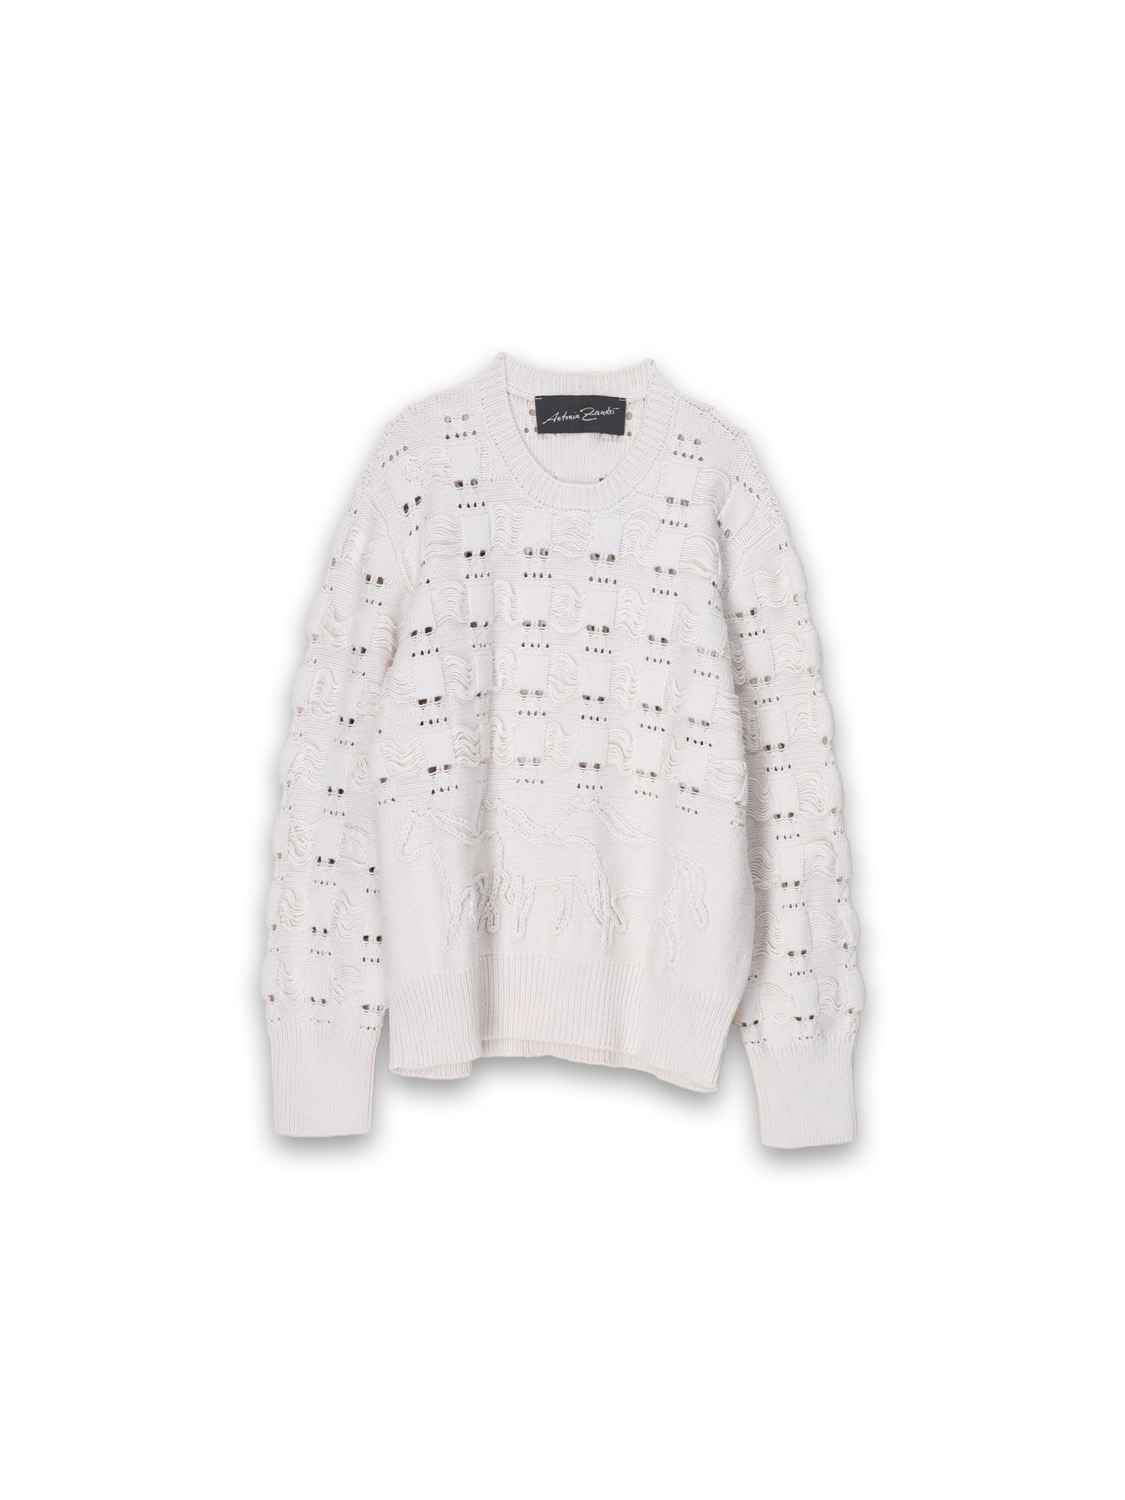 Carola – cotton sweater with ajour pattern 